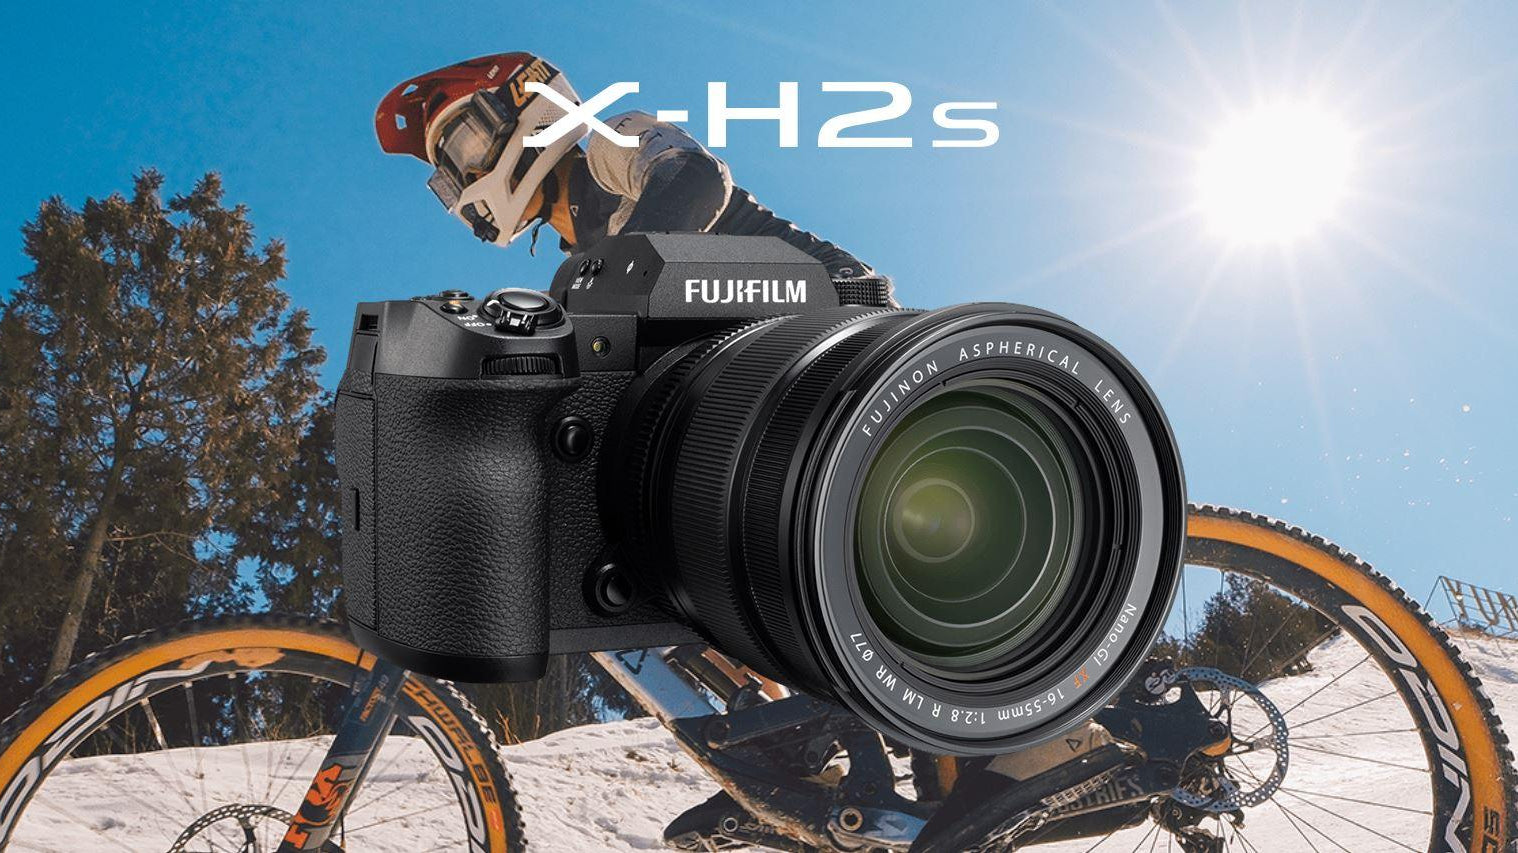 Fujifilm announces new X-H2S mirrorless camera